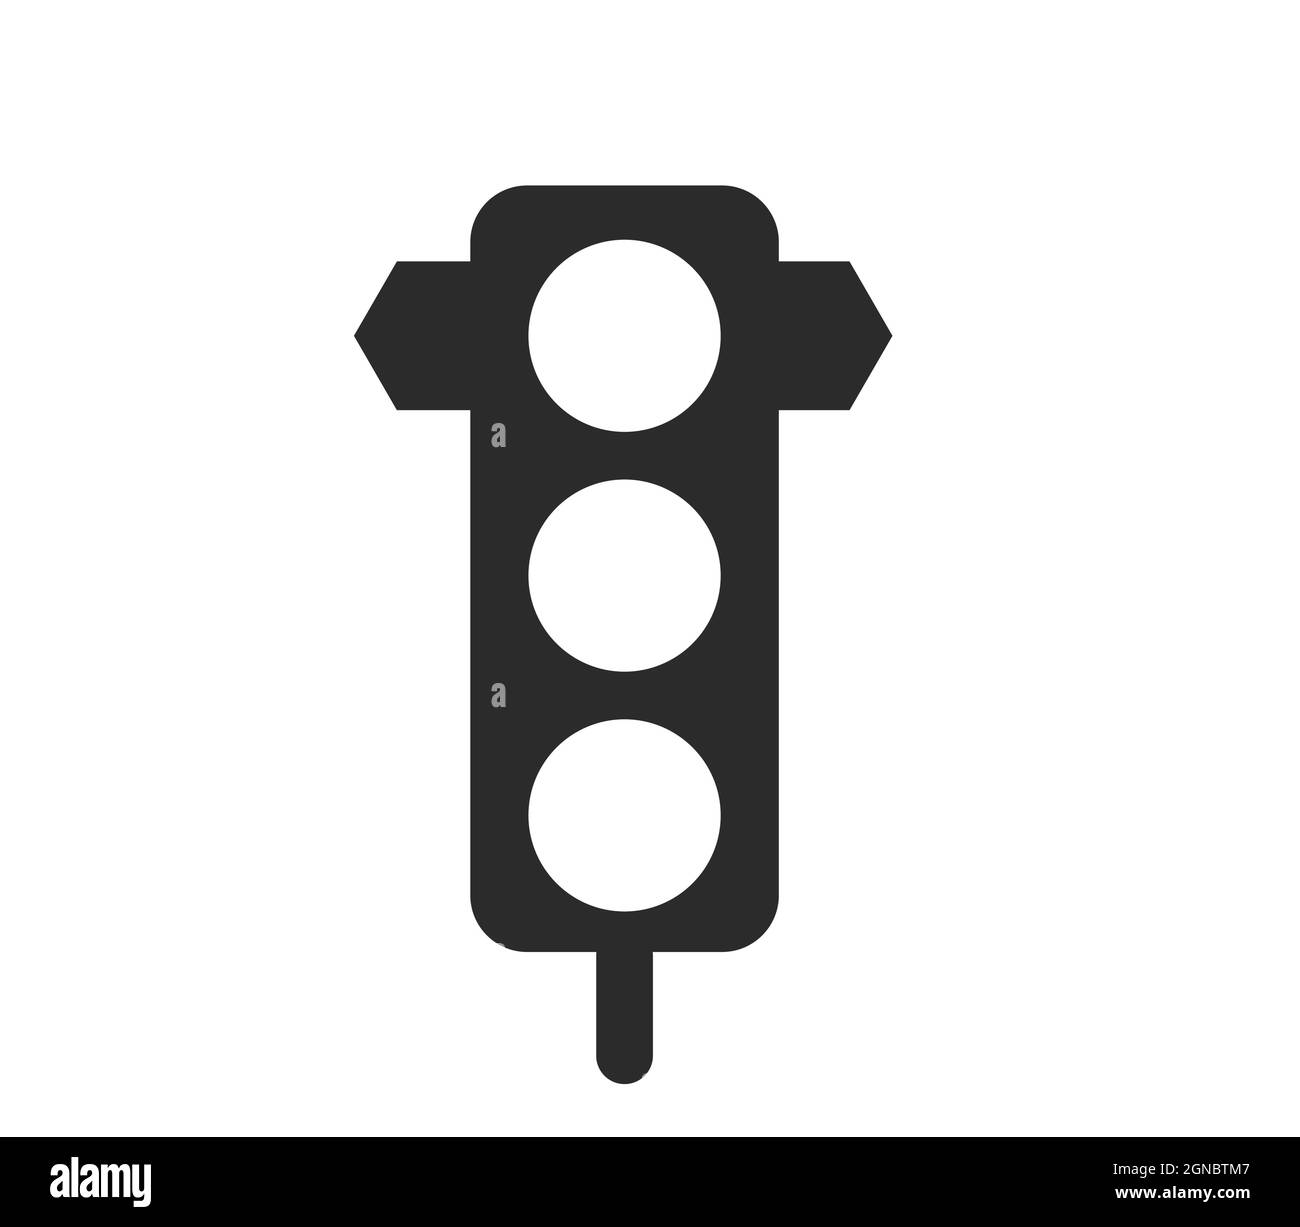 Traffic signal illustration icon Stock Vector